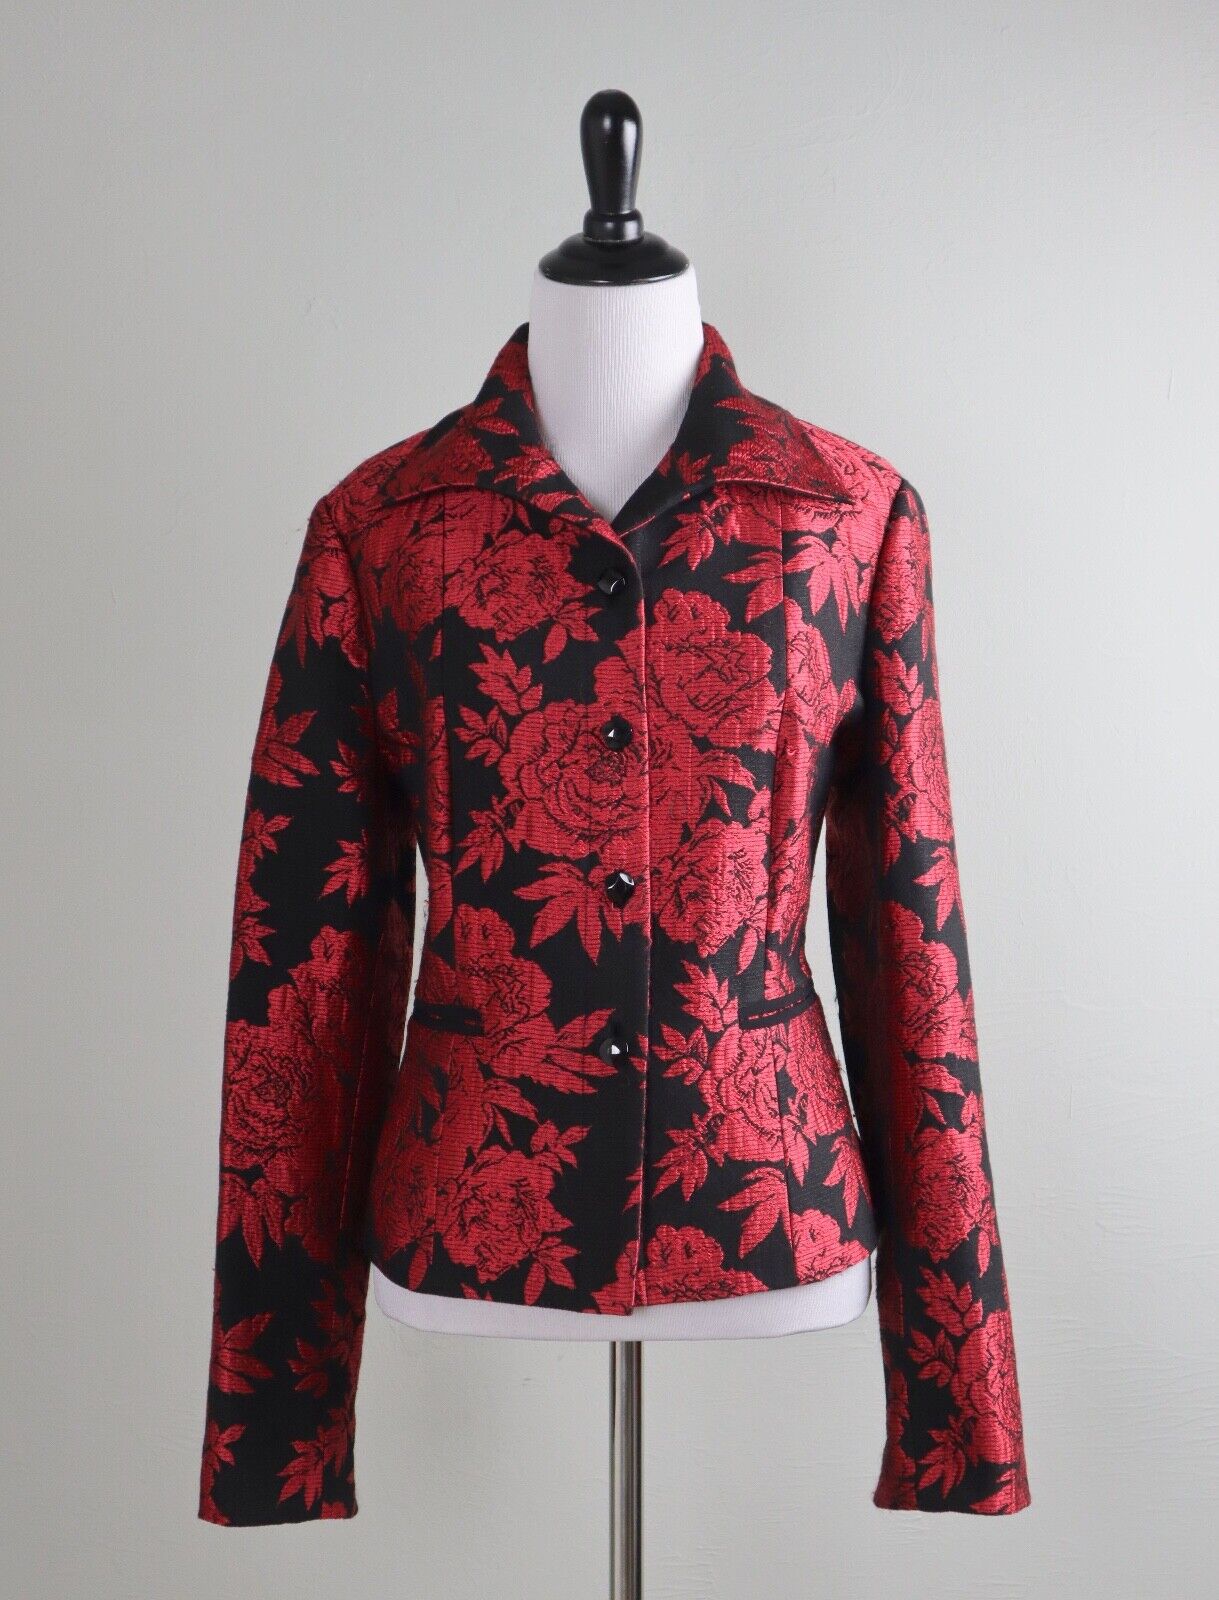 CARLISLE $498 Red Rose Floral Jacquard Lined Dressy Jacket Top Size 4